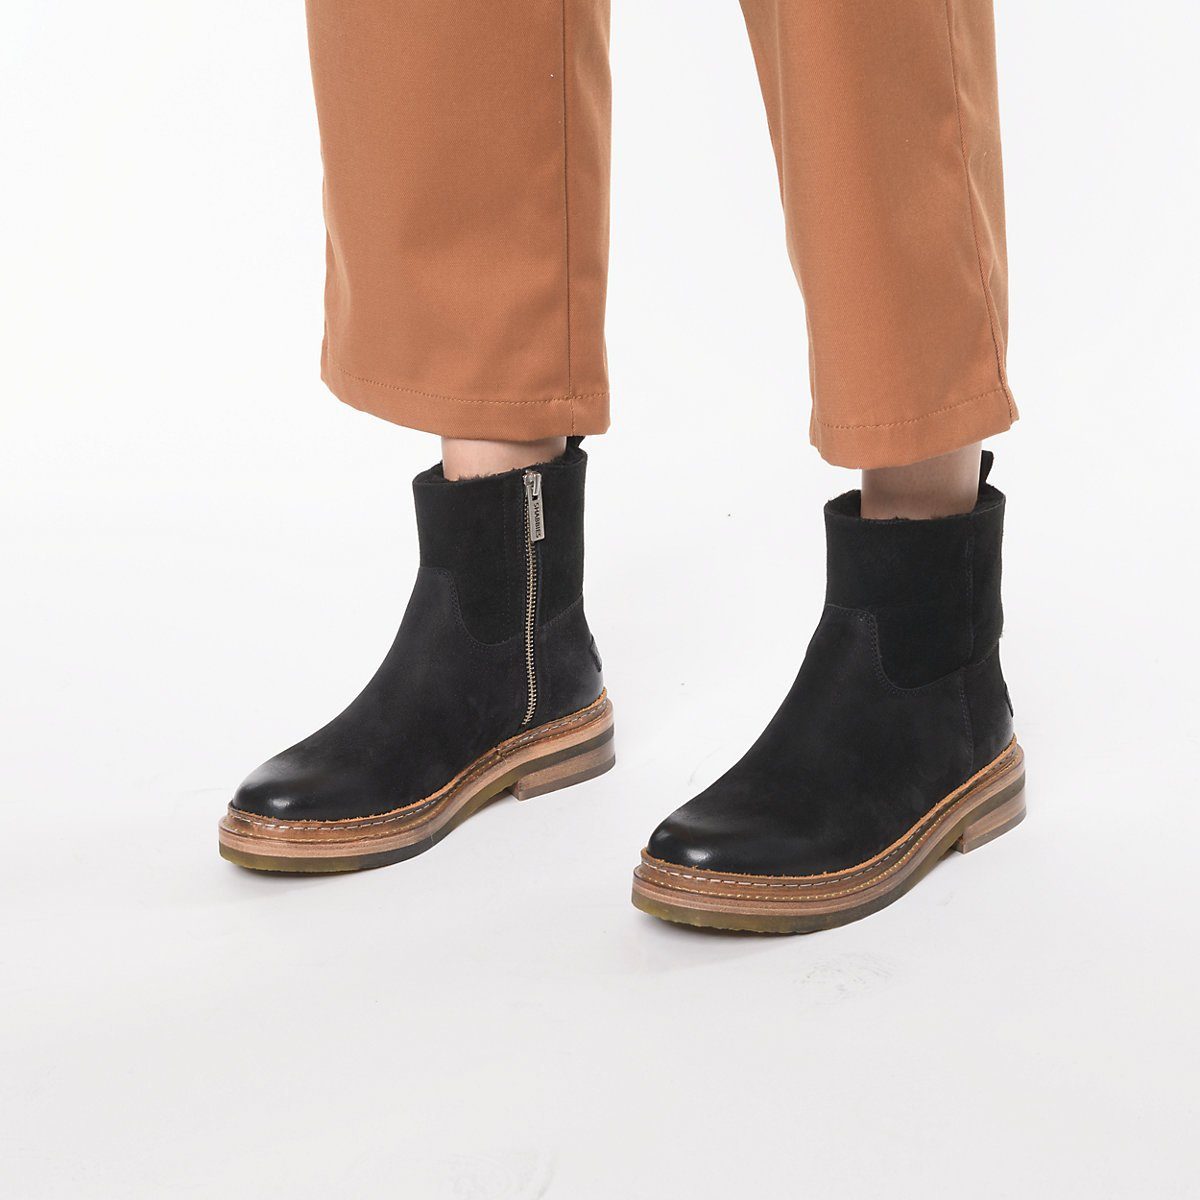 Schuhe Stiefeletten Shabbies Amsterdam Shs0998 Ankle Boot Nubuck Matching Double Face Winterstiefelette